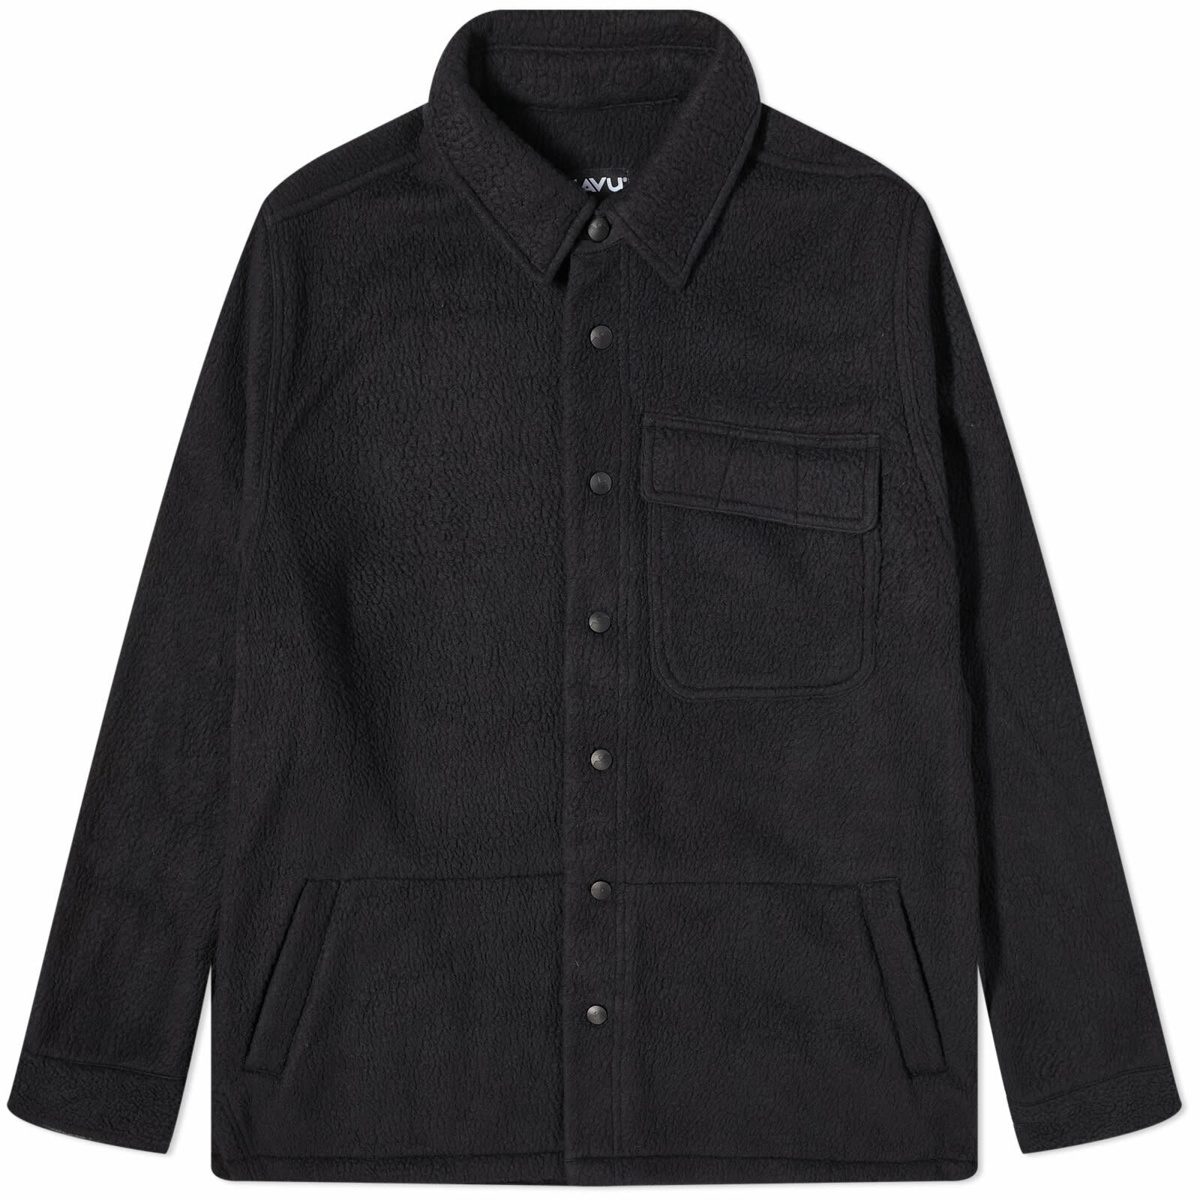 KAVU Men's Balsa Pullover Pile Fleece in Black KAVU